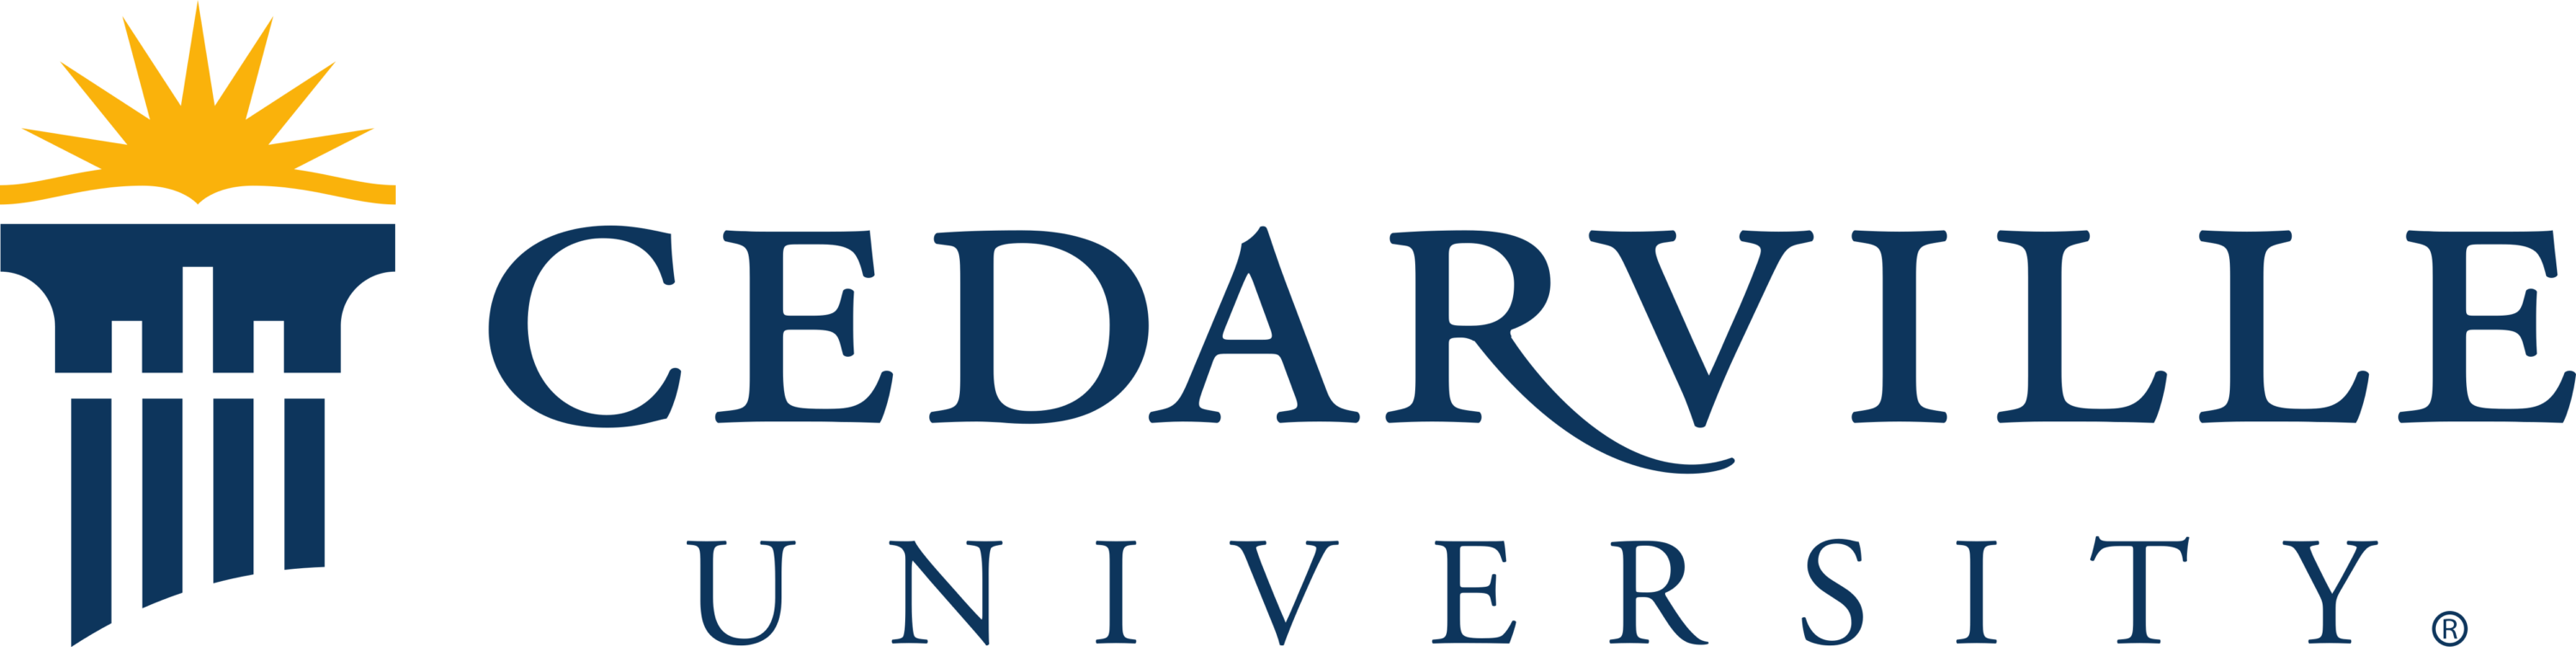 Cedarville University Logo horizontally